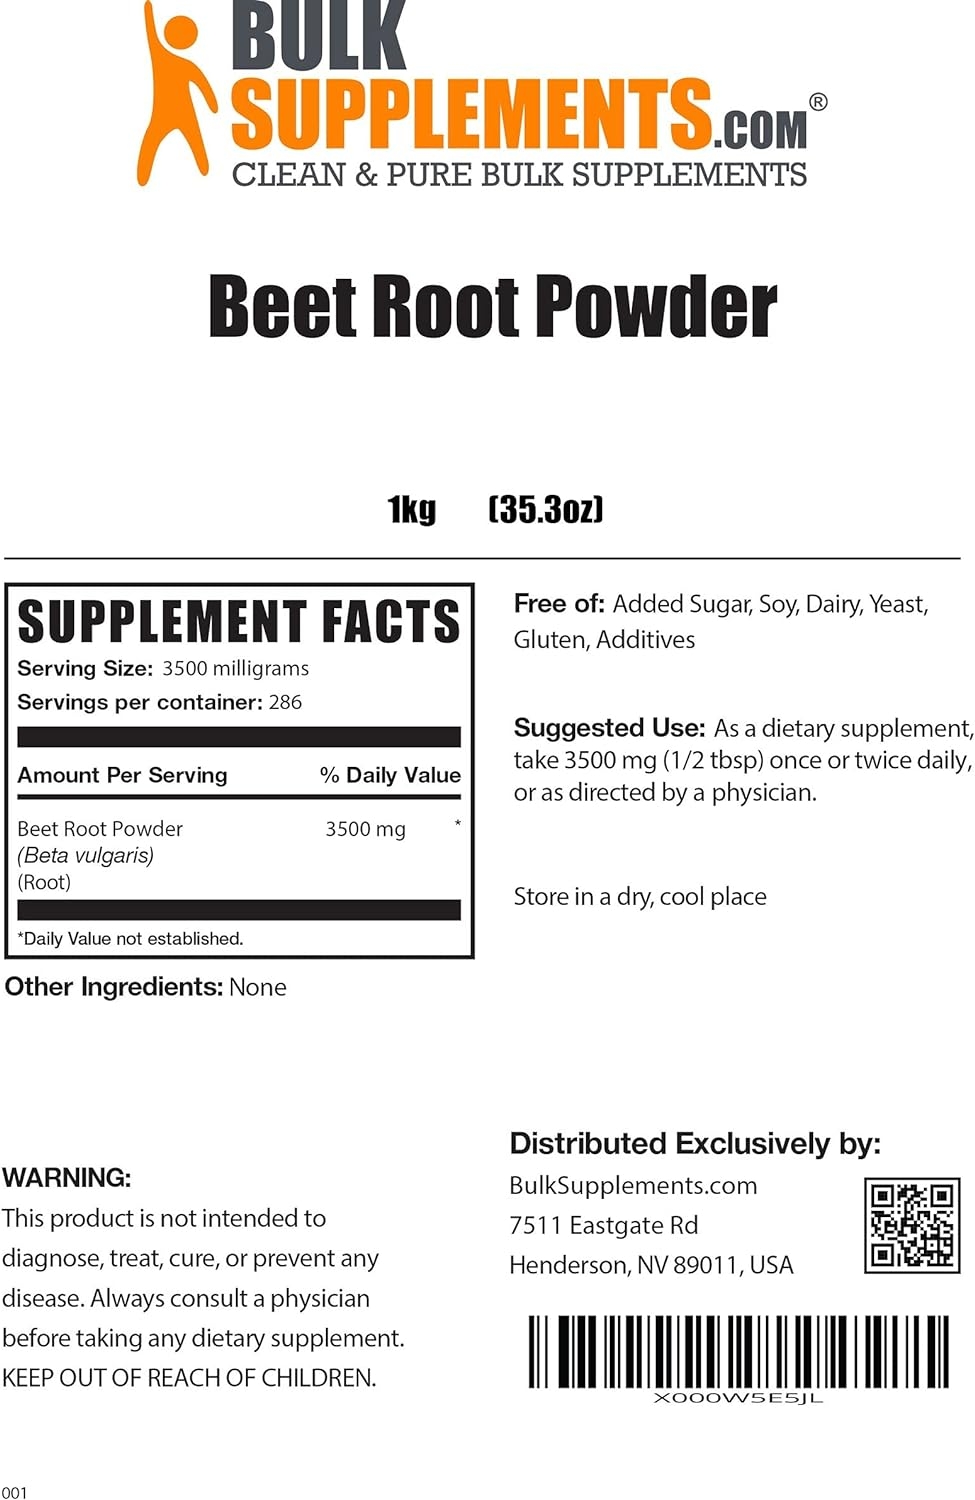 BulkSupplements.com Beet Root Powder - Beet Juice Powder - Natural Pre-Workout (1 Kilogram - 2.2 lbs)